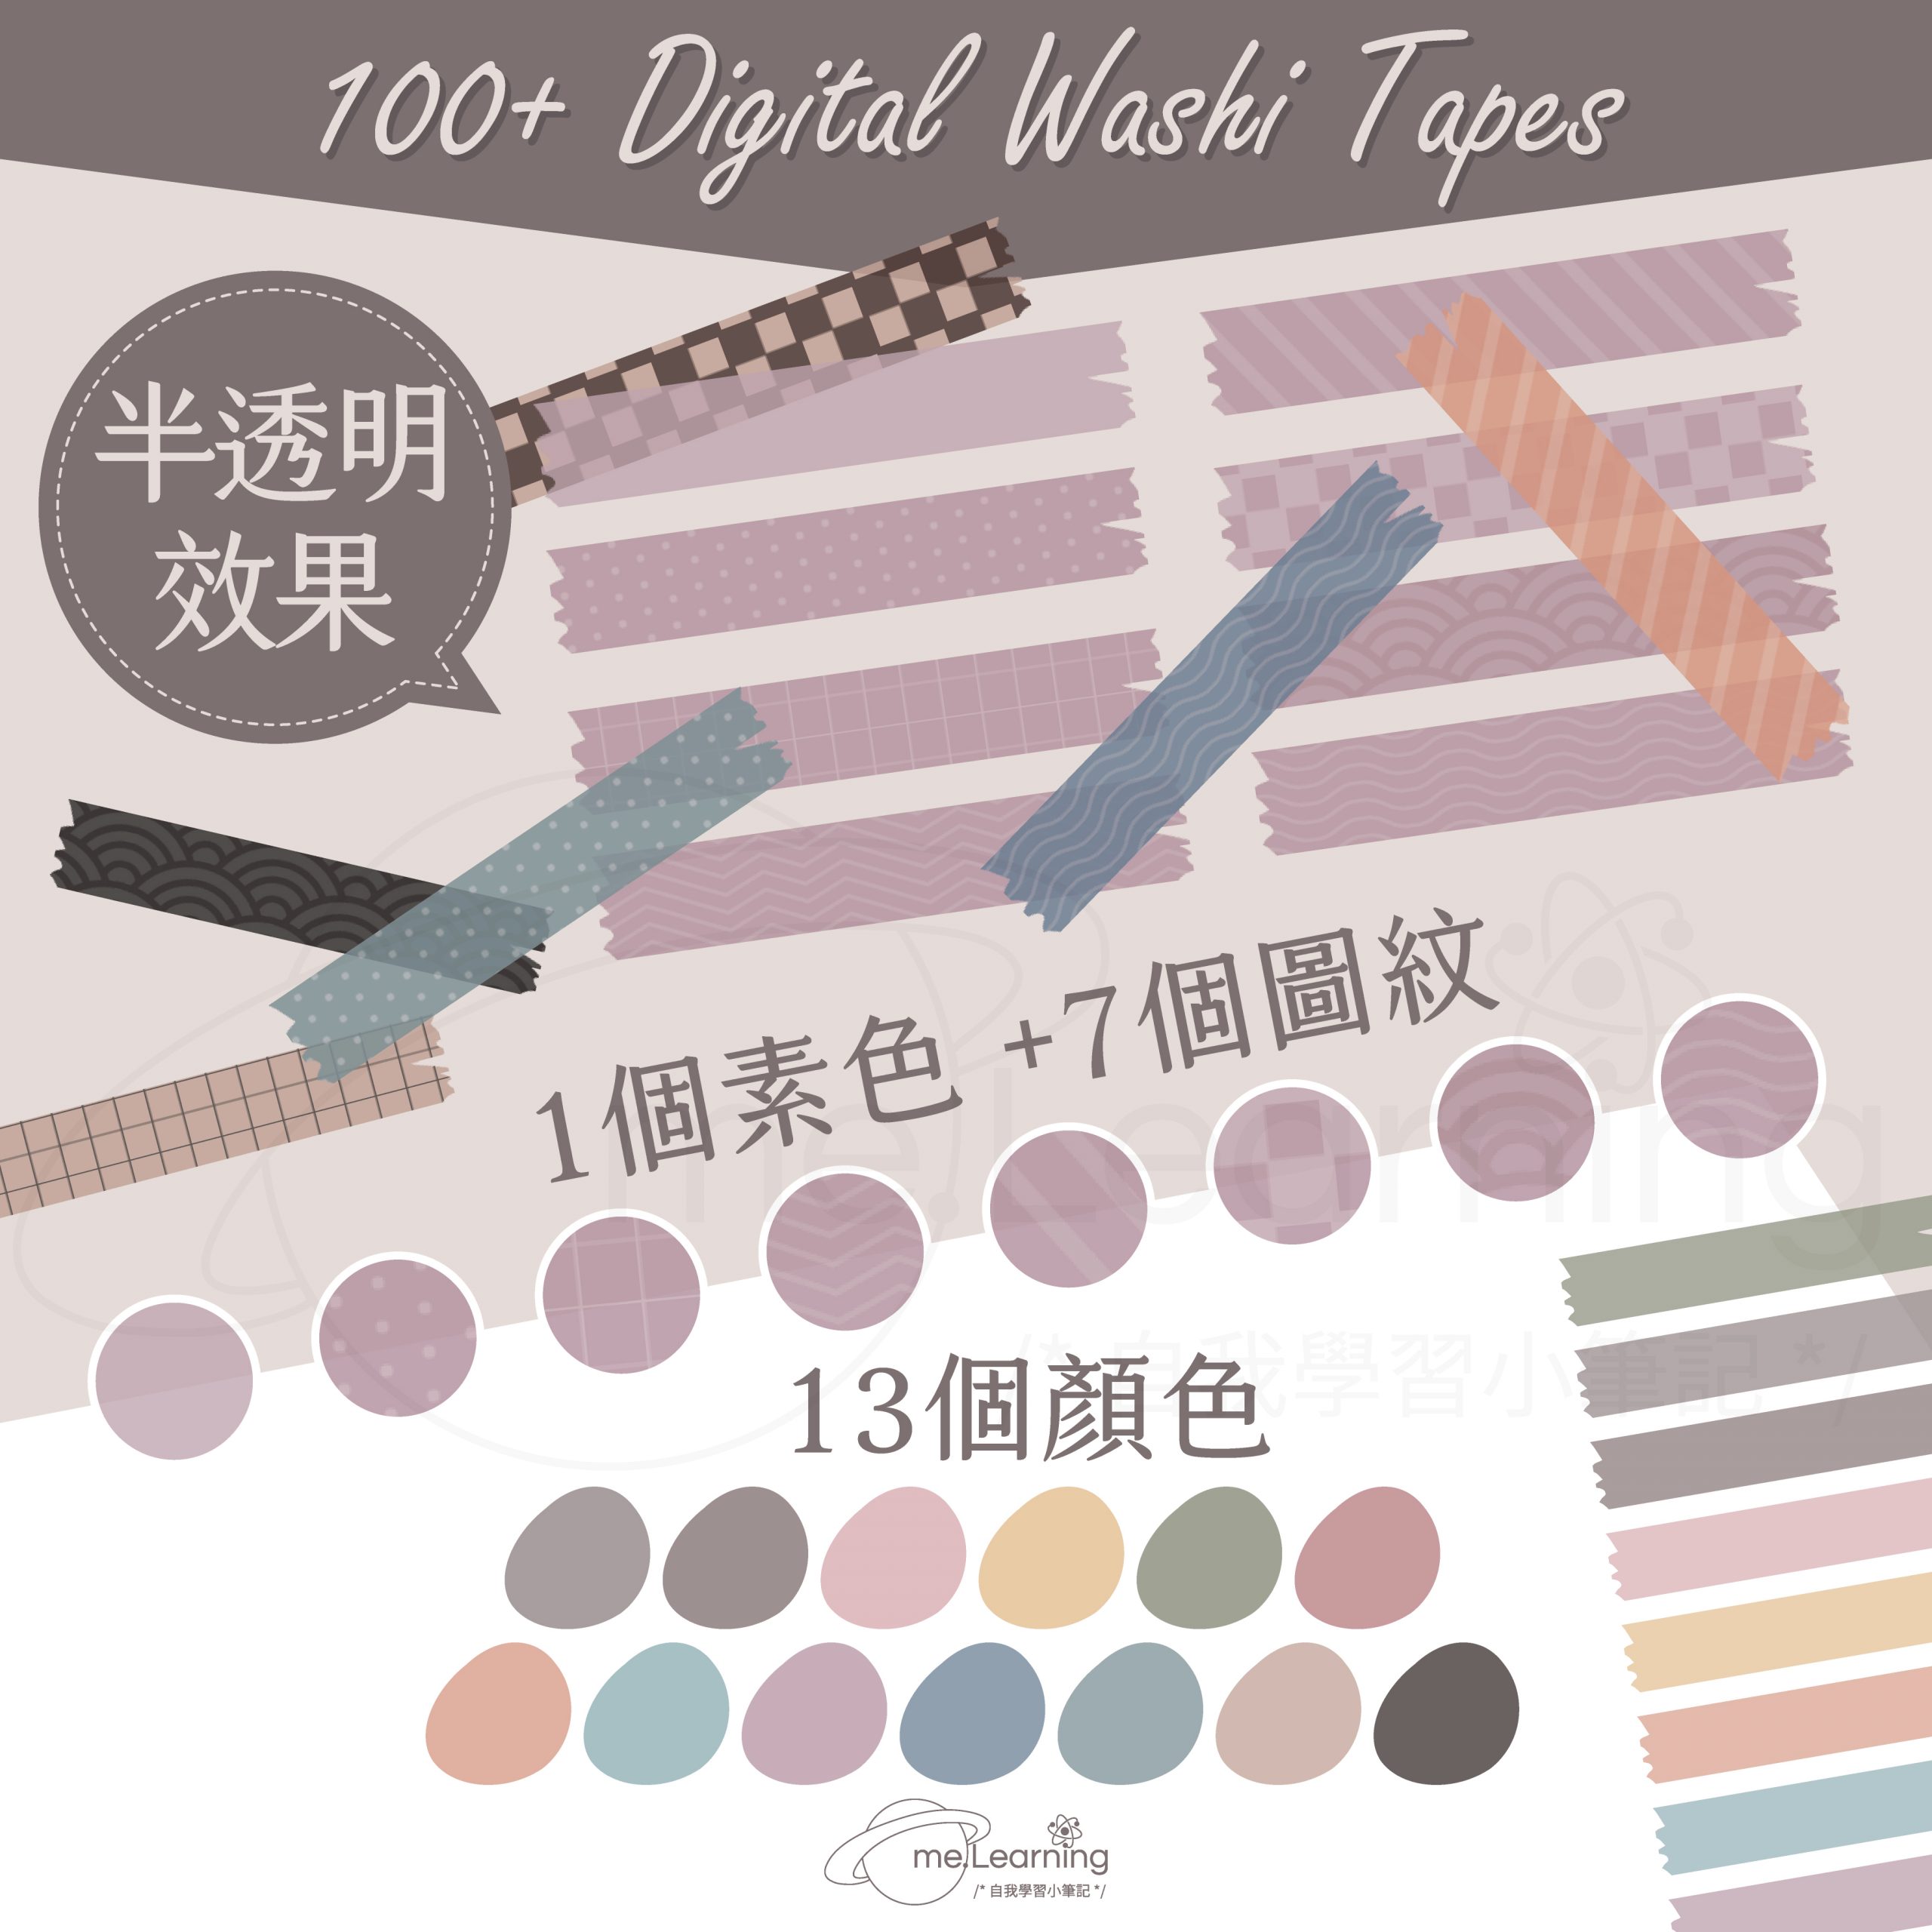 Digital Washi Tapes 001 2 3600x3600 1 scaled | 電子紙膠帶-半透明簡約風100張+ png - WD0001 | me.Learning |